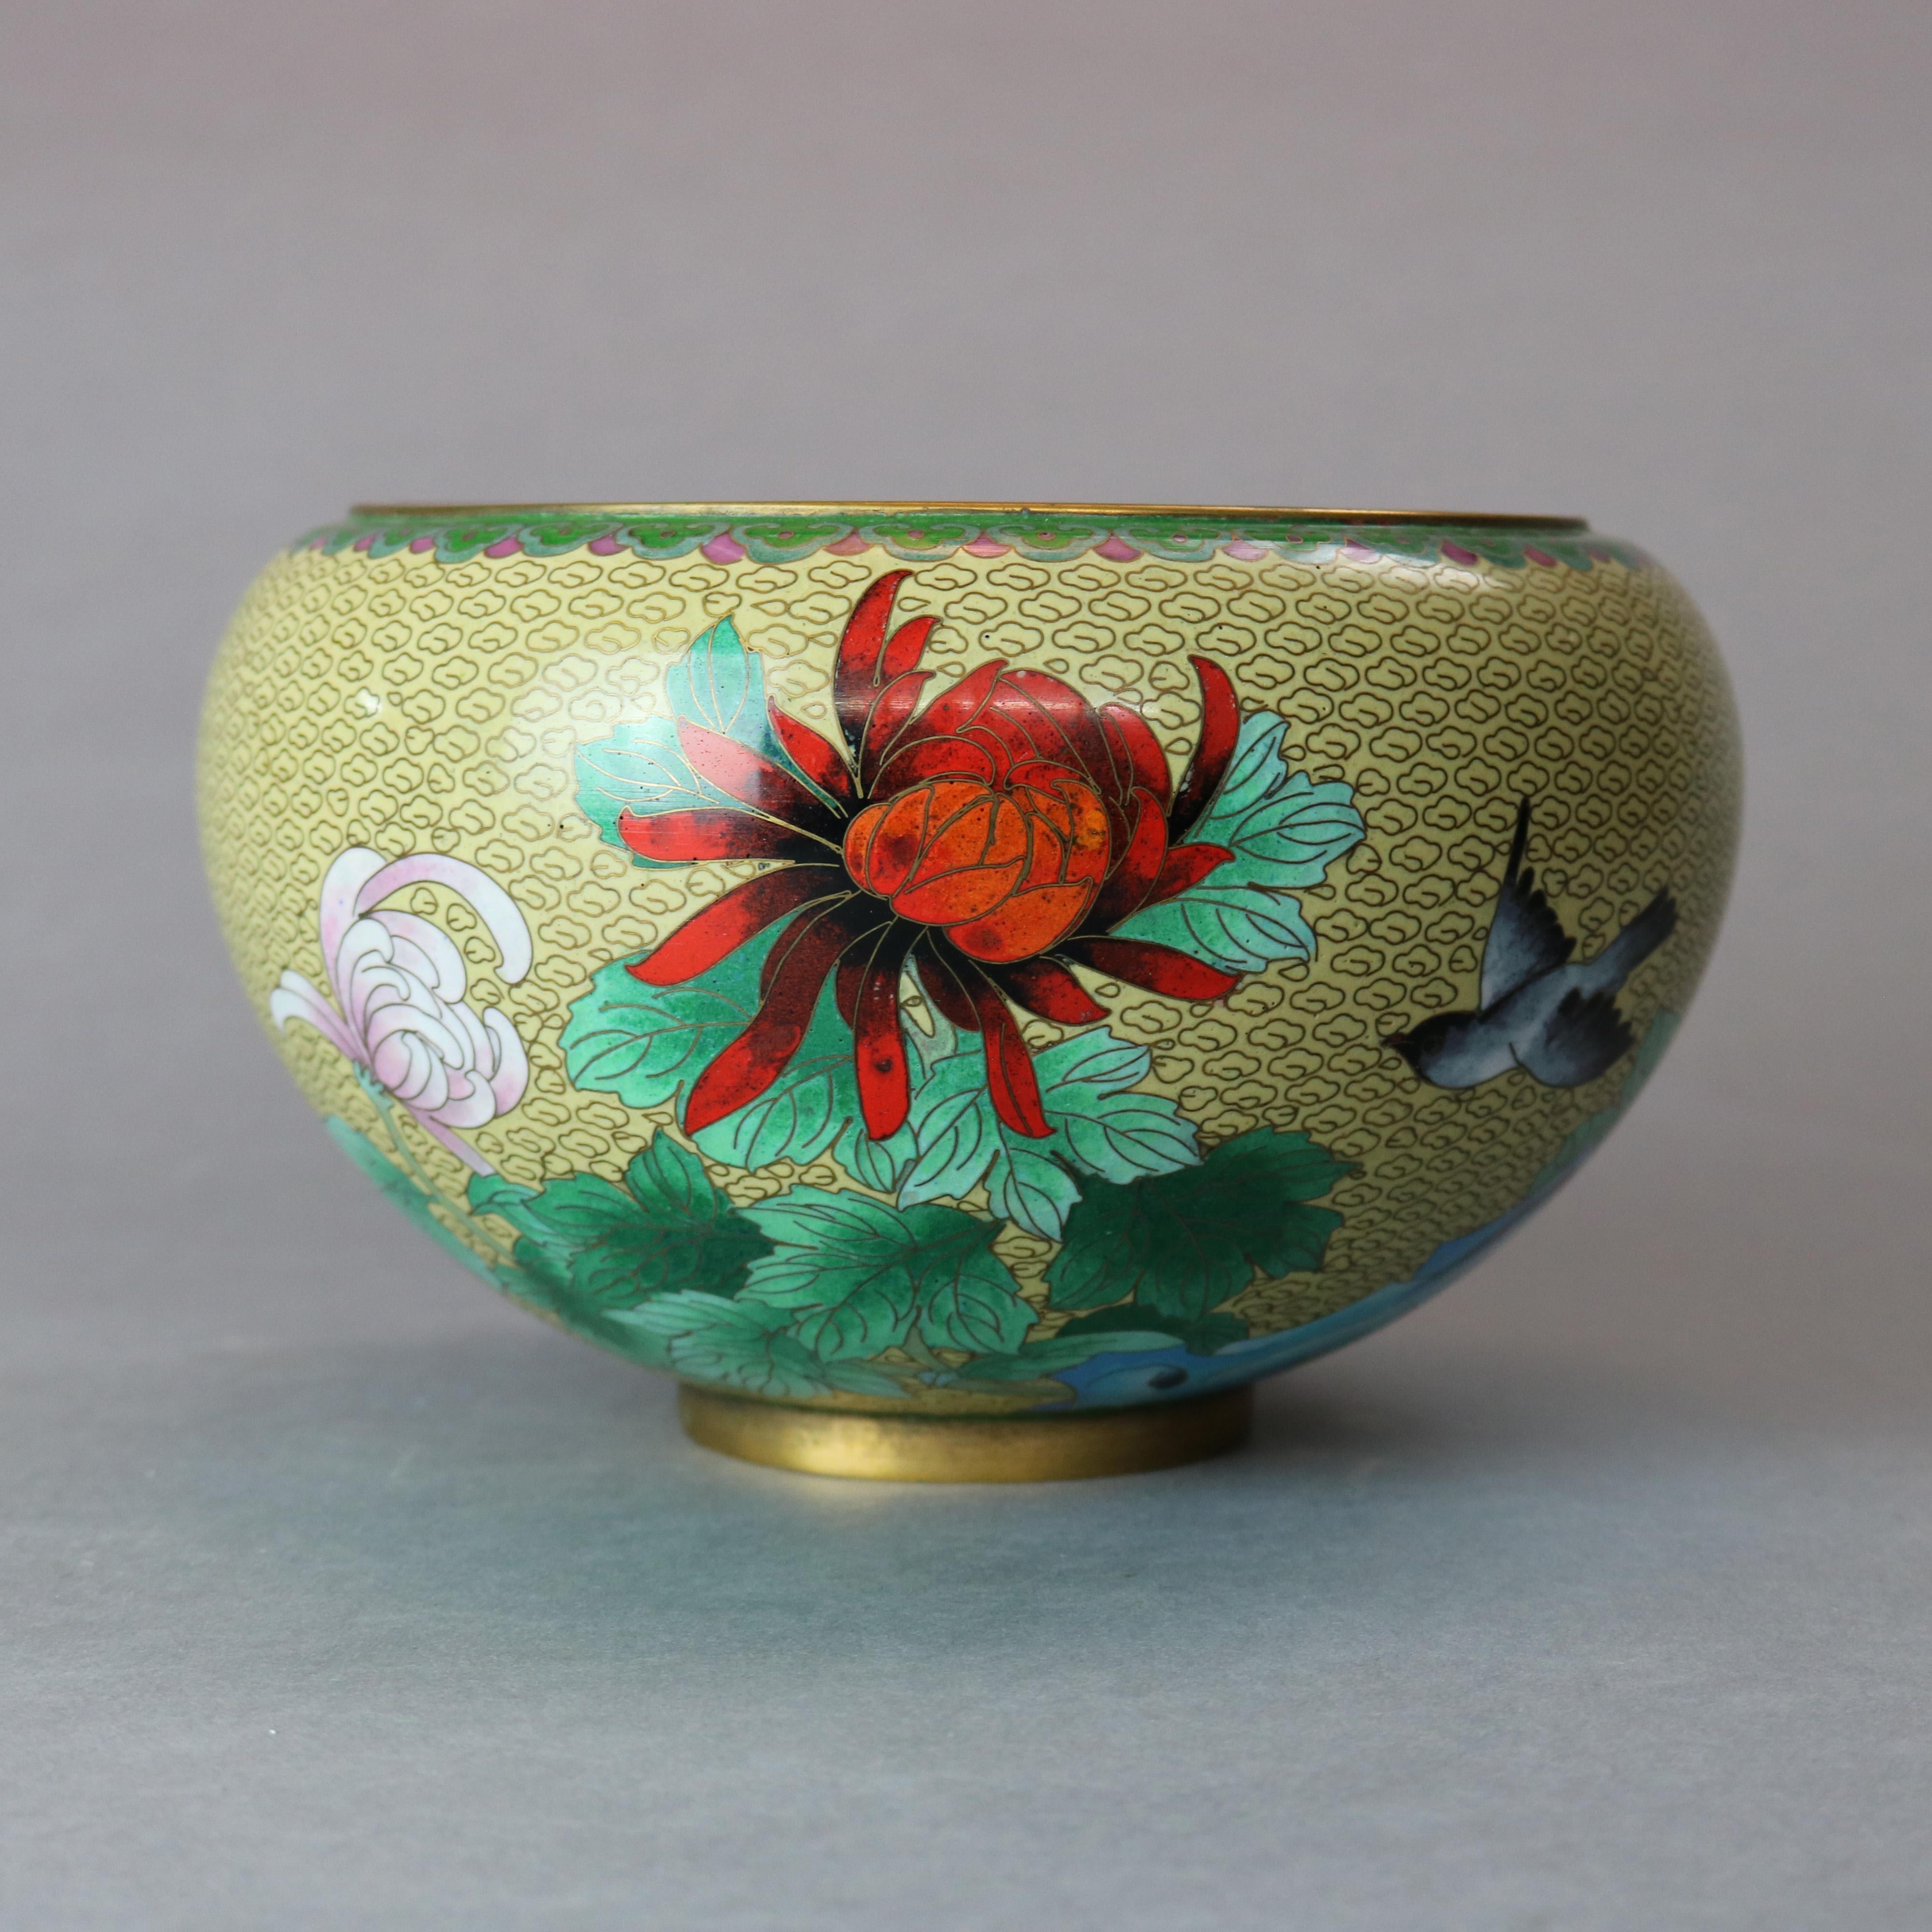 20th Century Antique Chinese Polychrome Floral Cloisonné Enameled Bowl, circa 1900